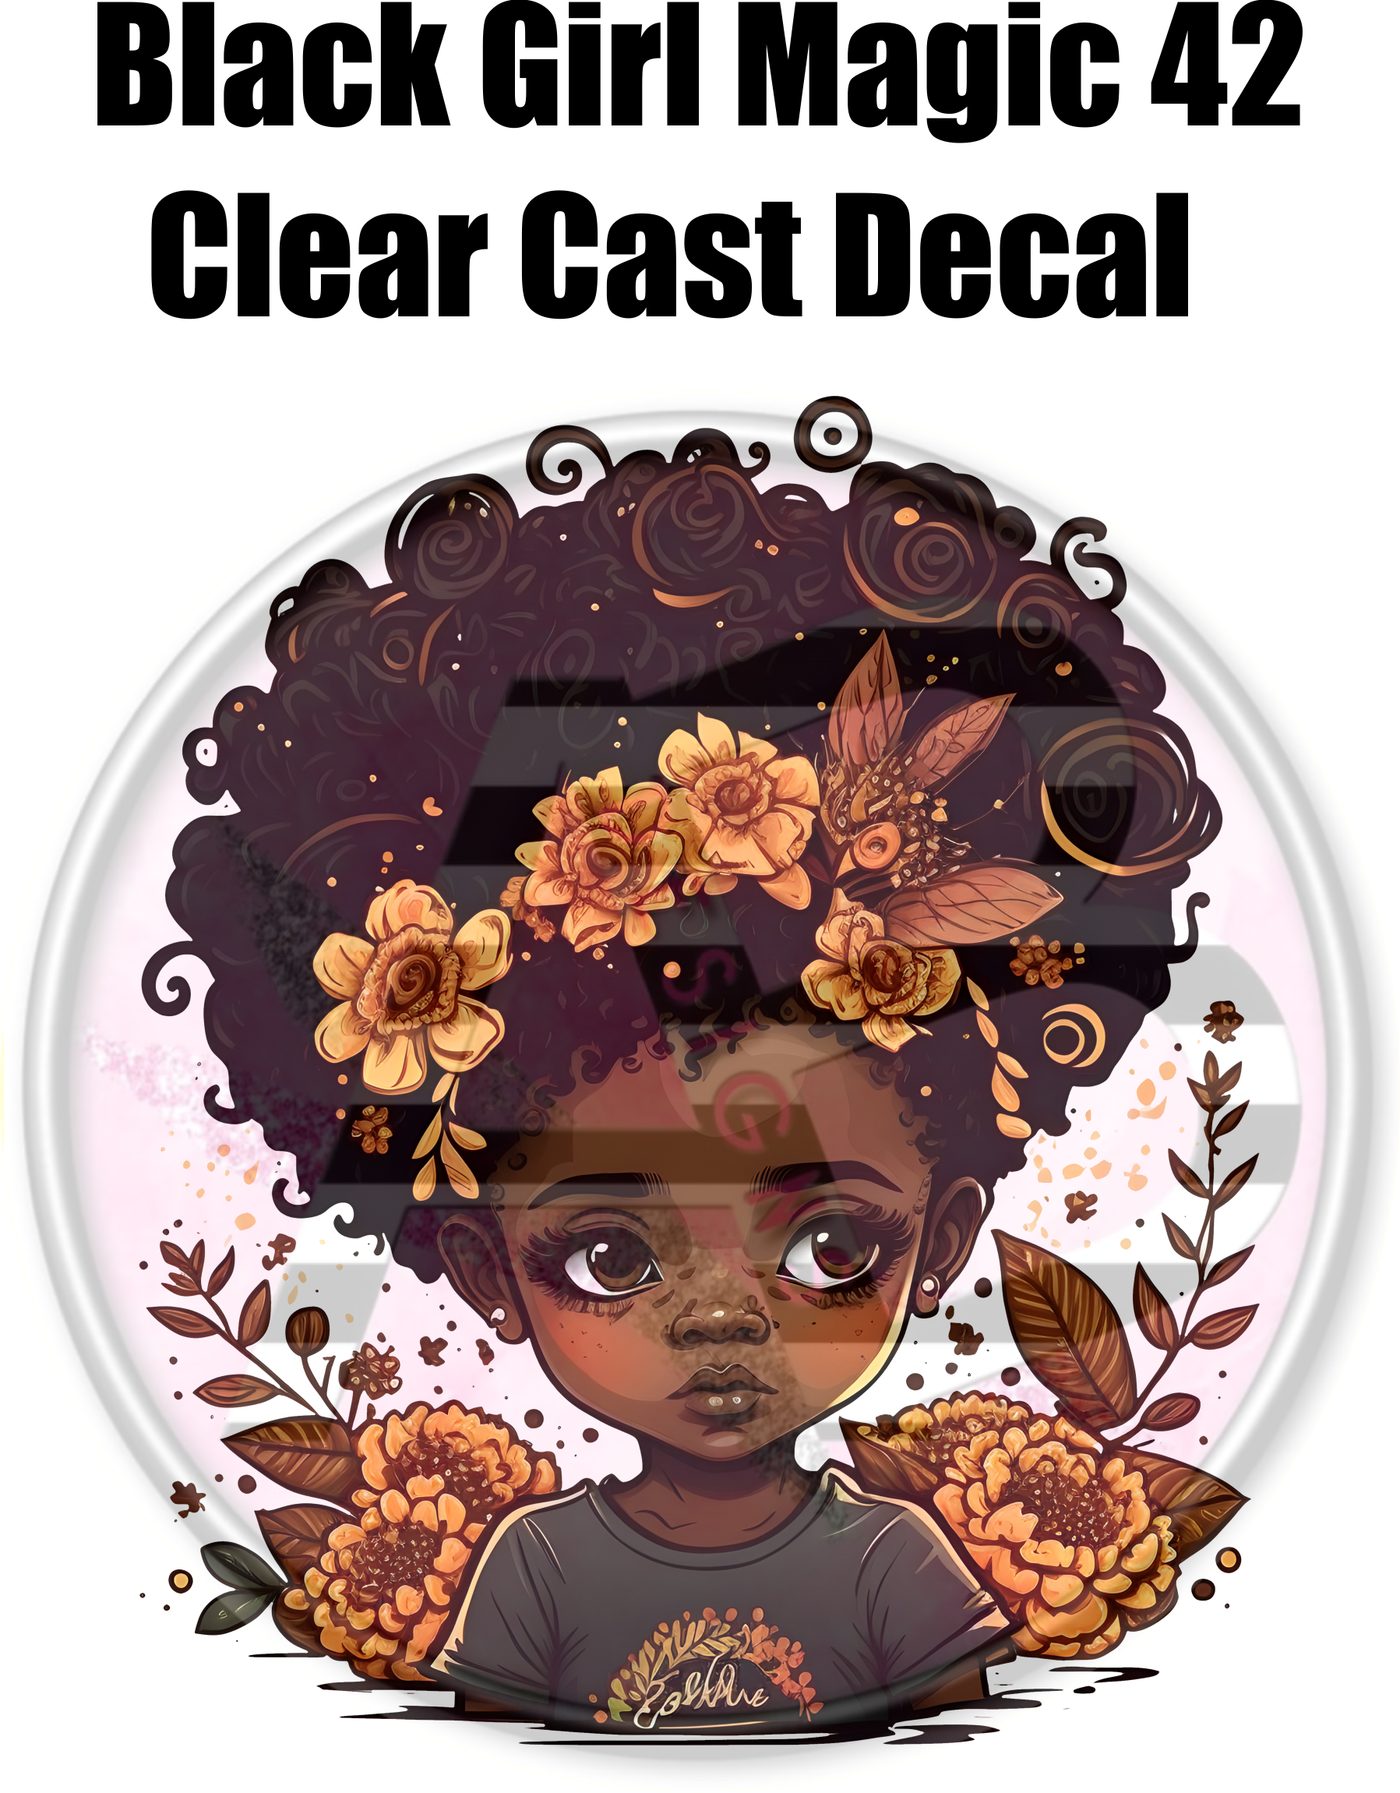 Black Girl Magic 42 - Clear Cast Decal